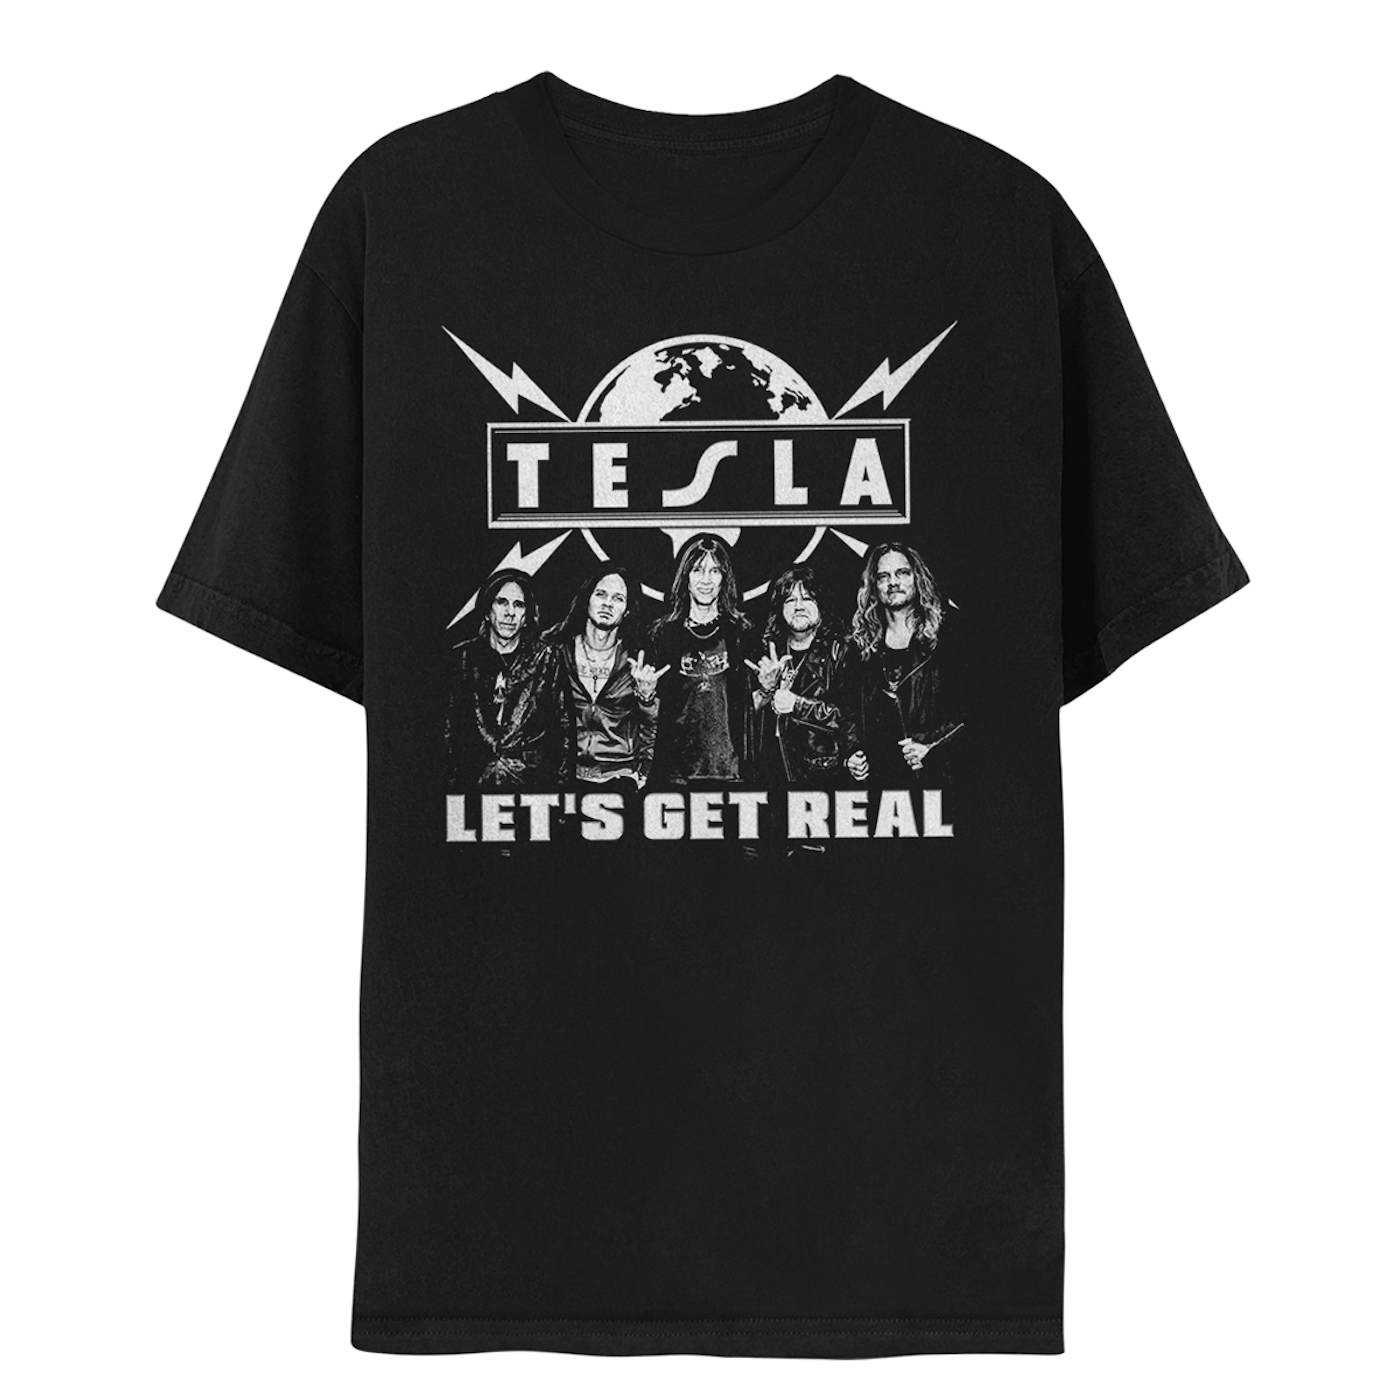 Tesla Shirts, Tesla Merch, Tesla Hoodies, Tesla Vinyl Records